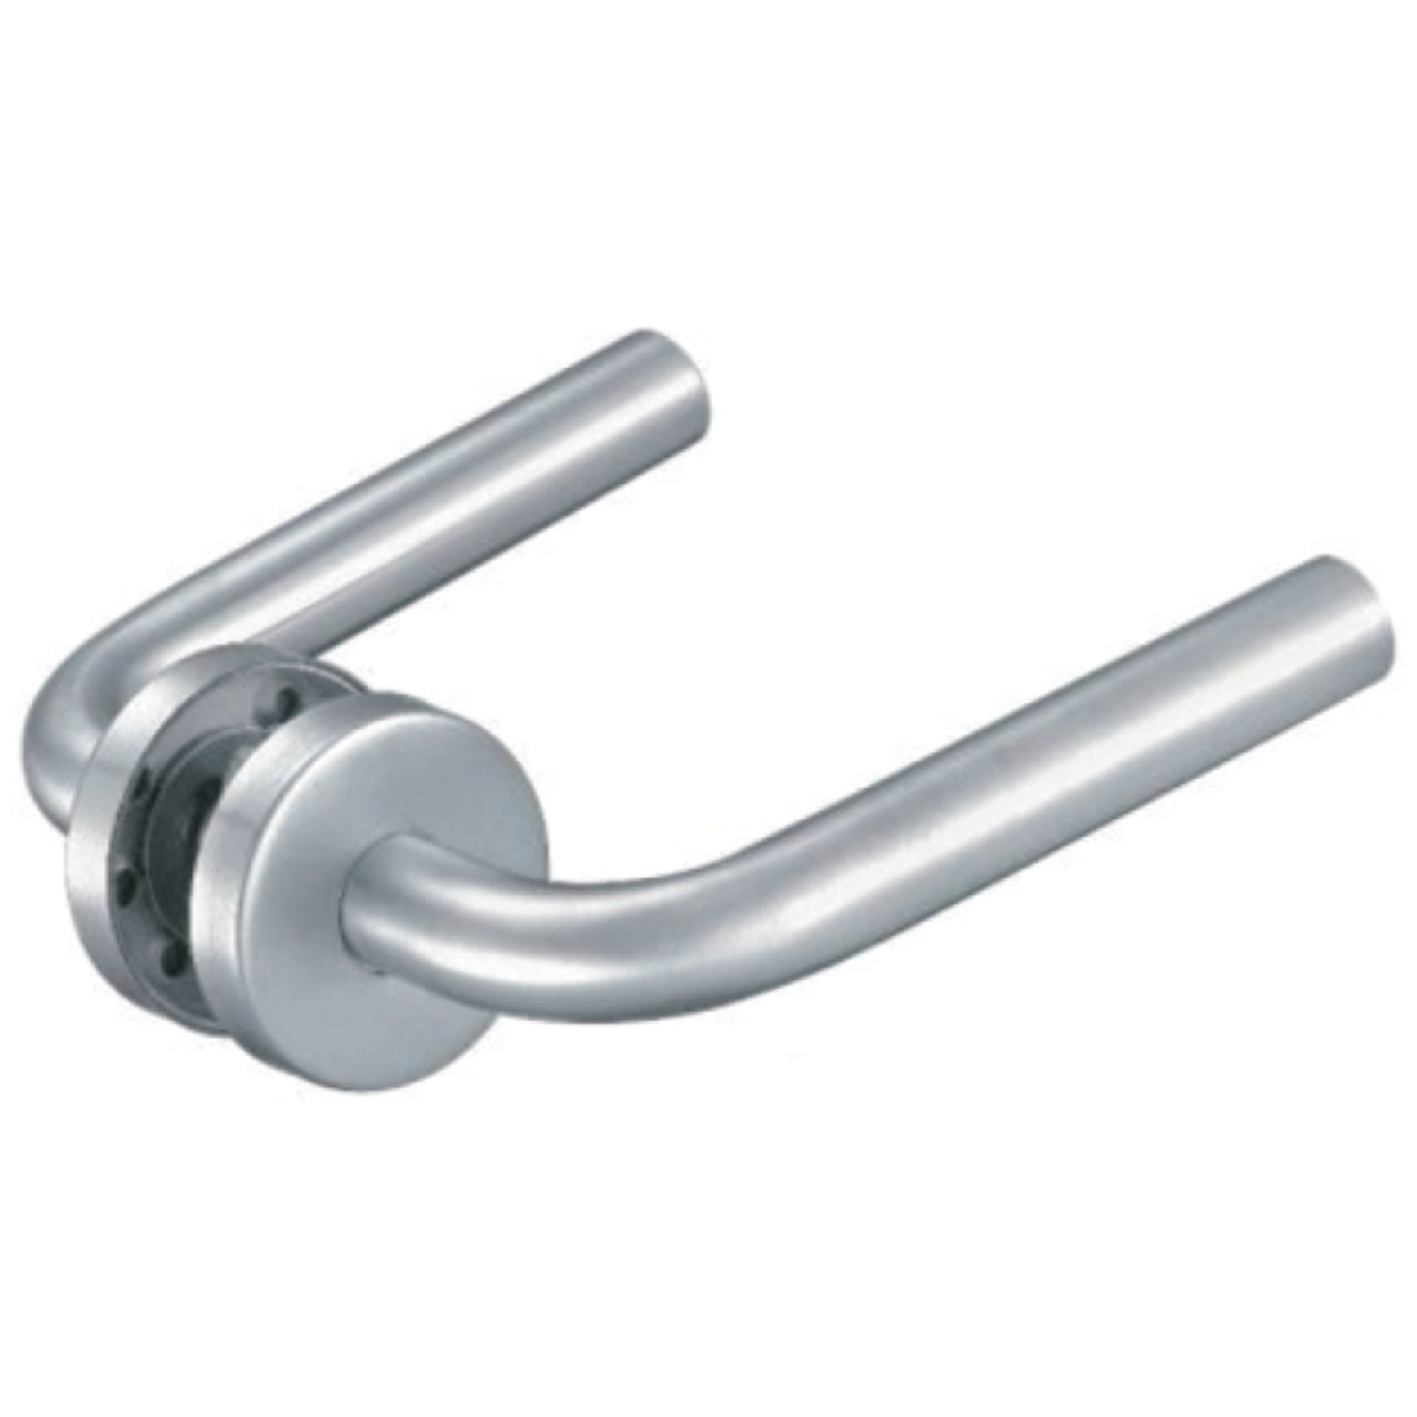 Stainless steel handle locks